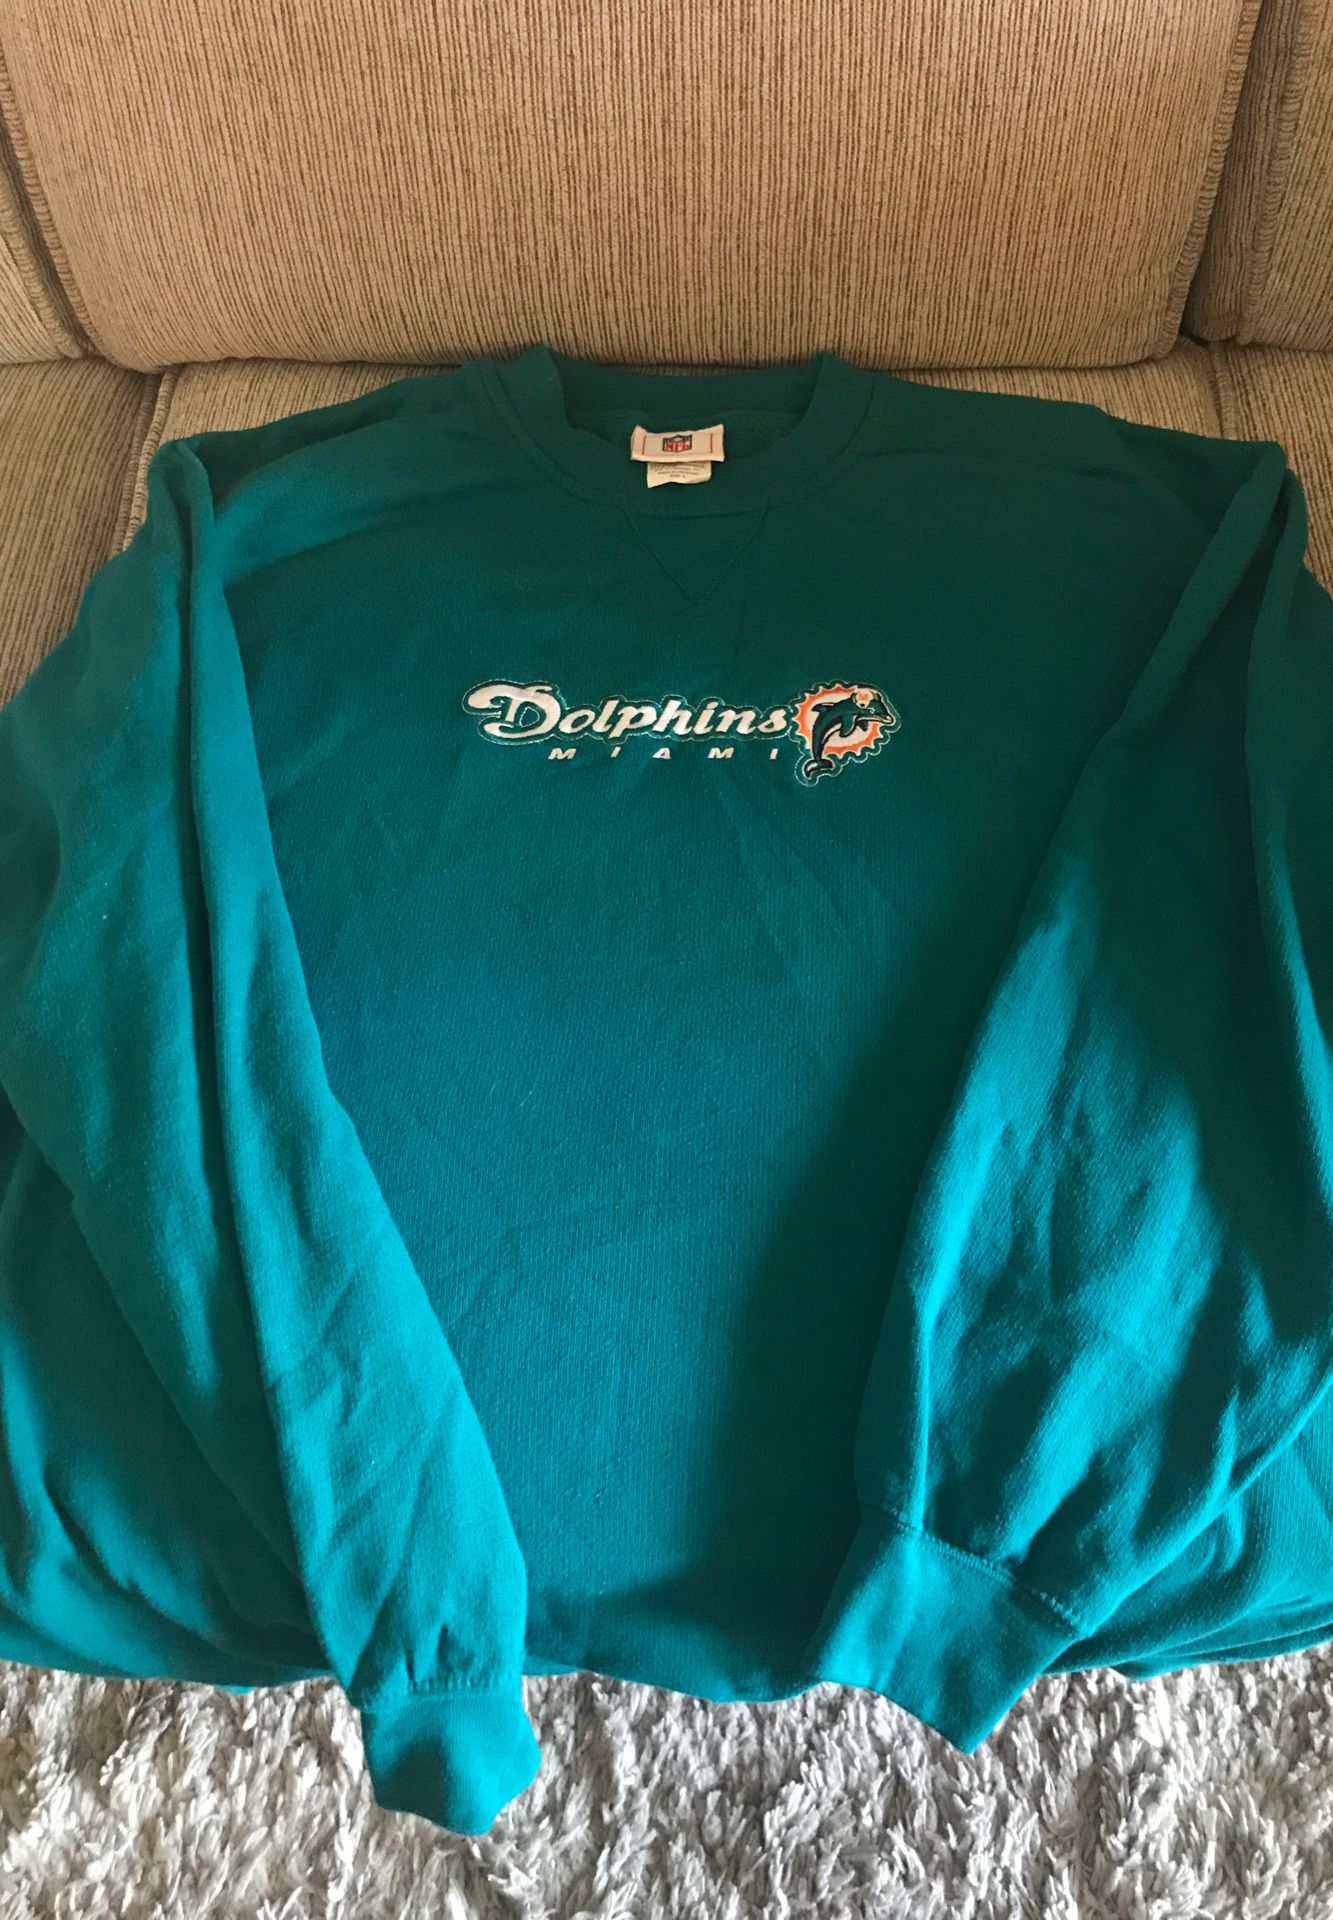 Miami Dolphins sweatshirt (old logo)